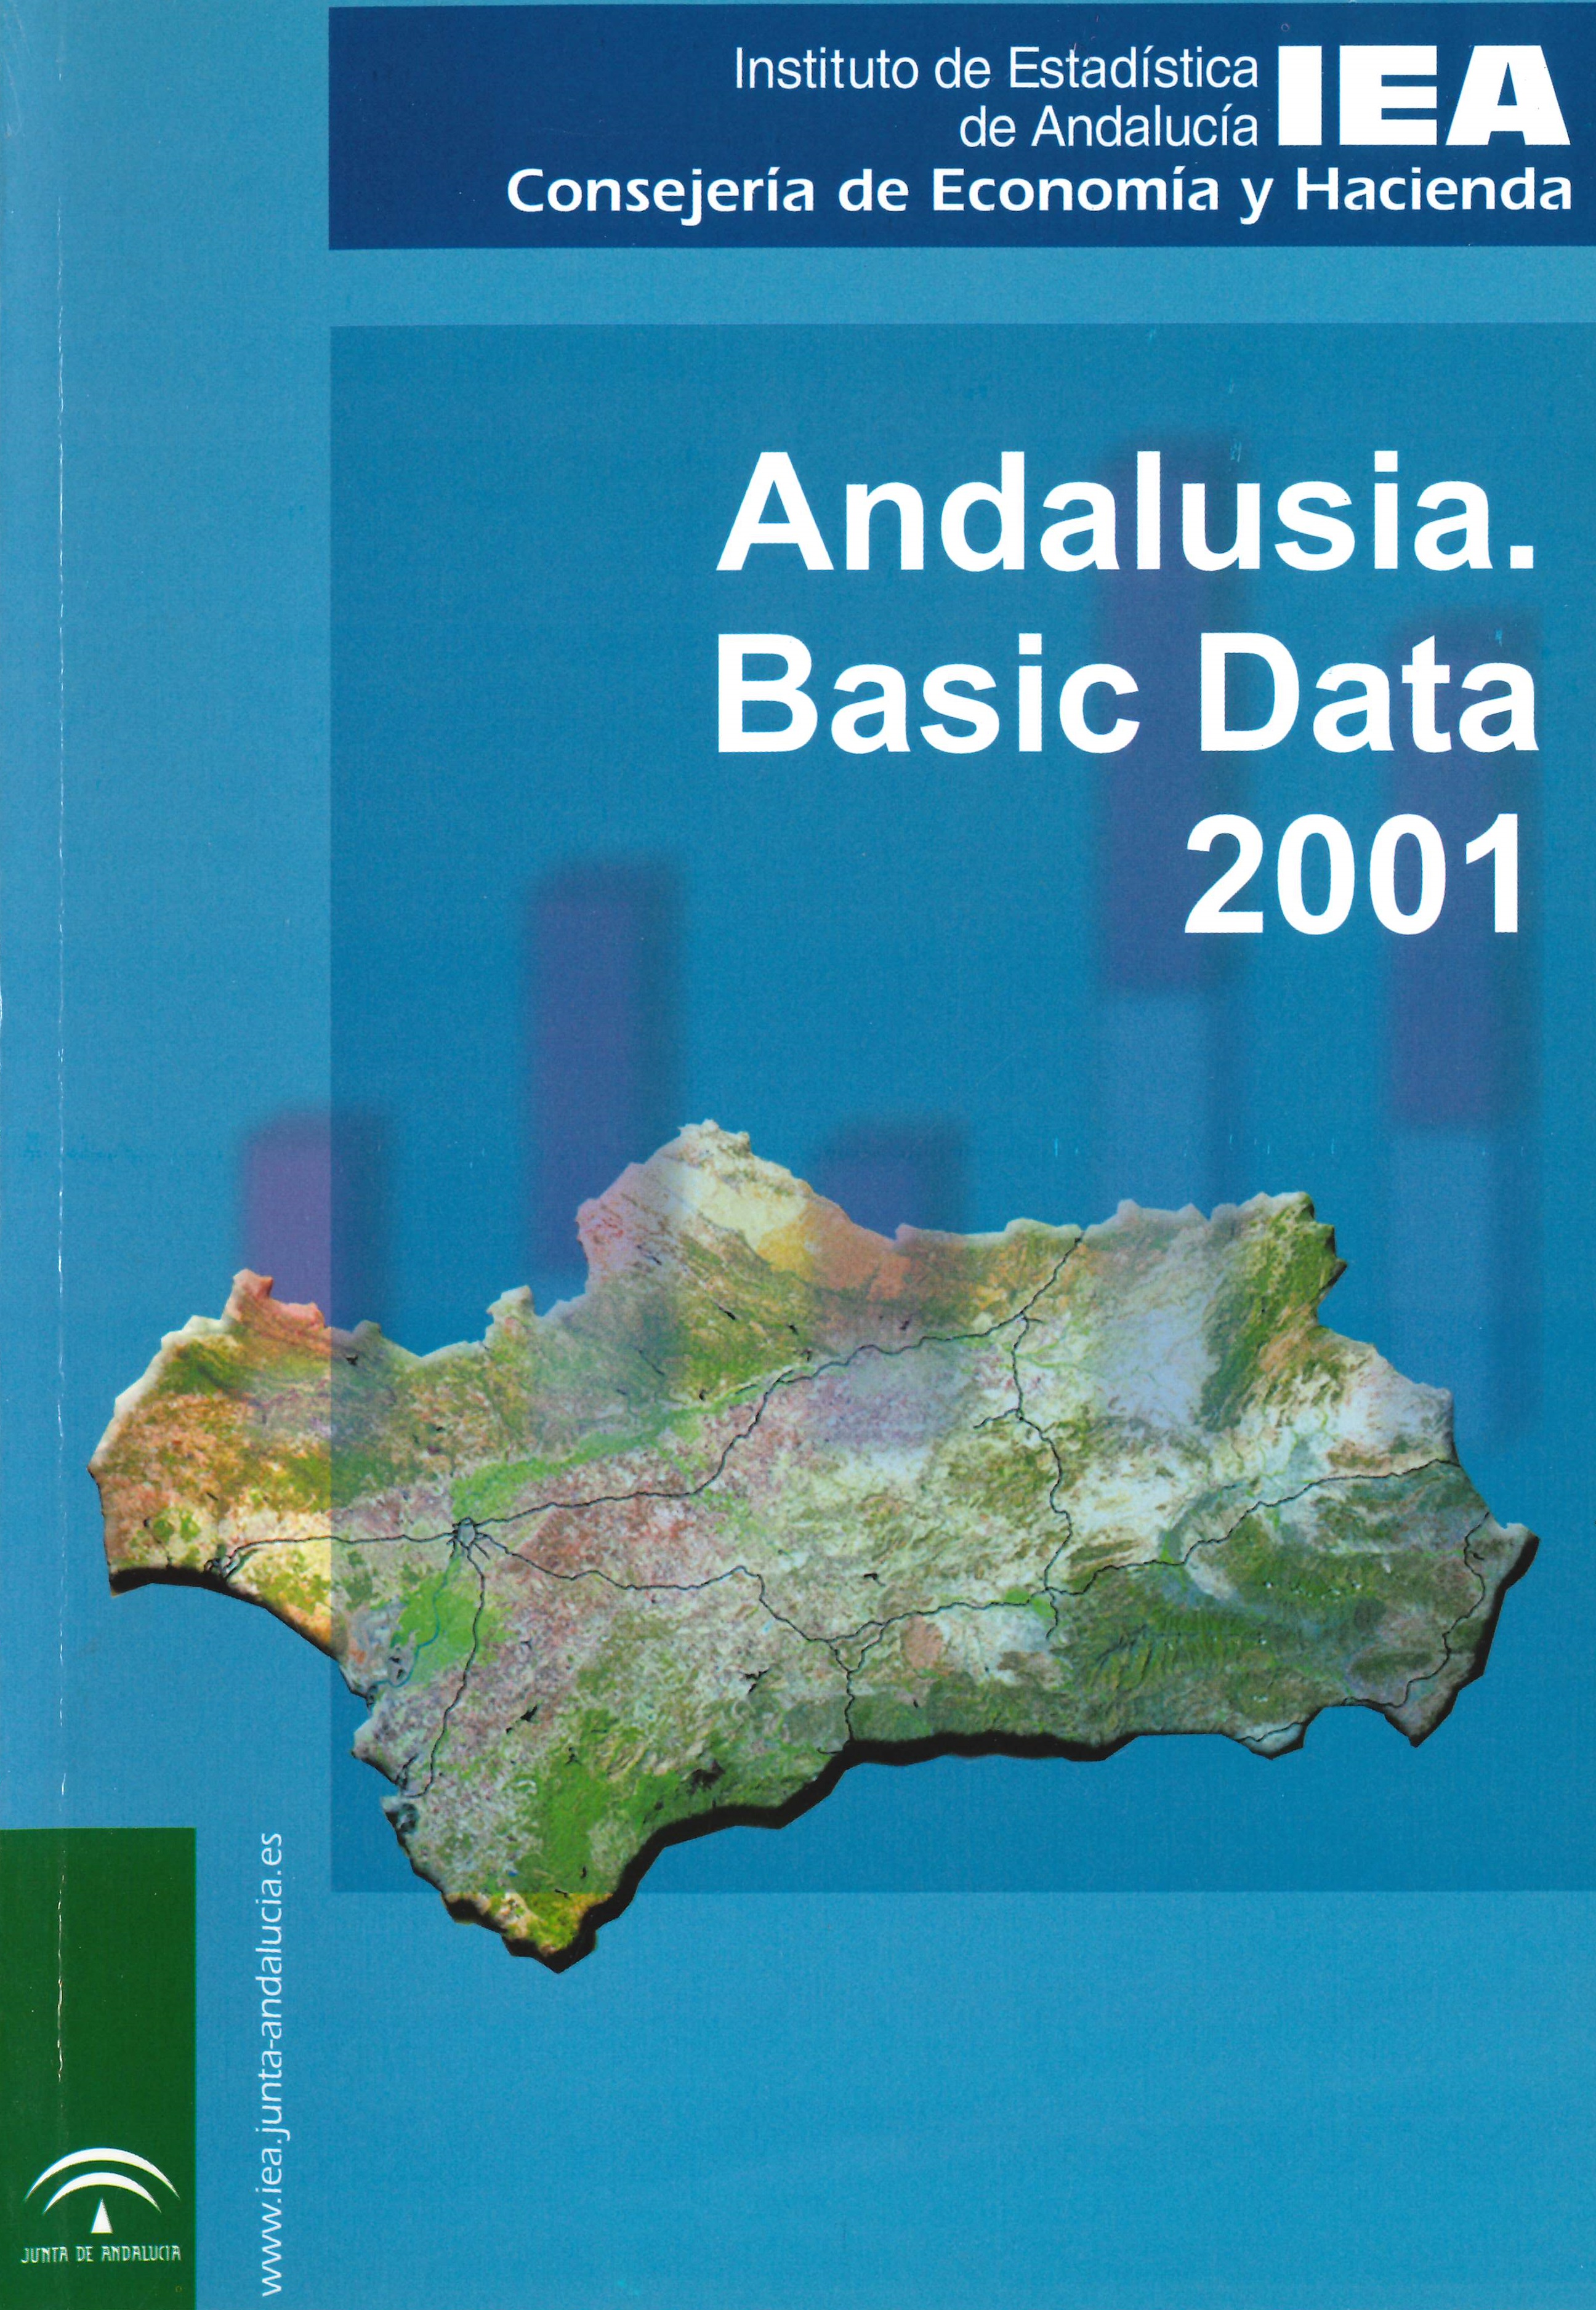 Imagen representativa de la publicación Andalusia: basic data 2001